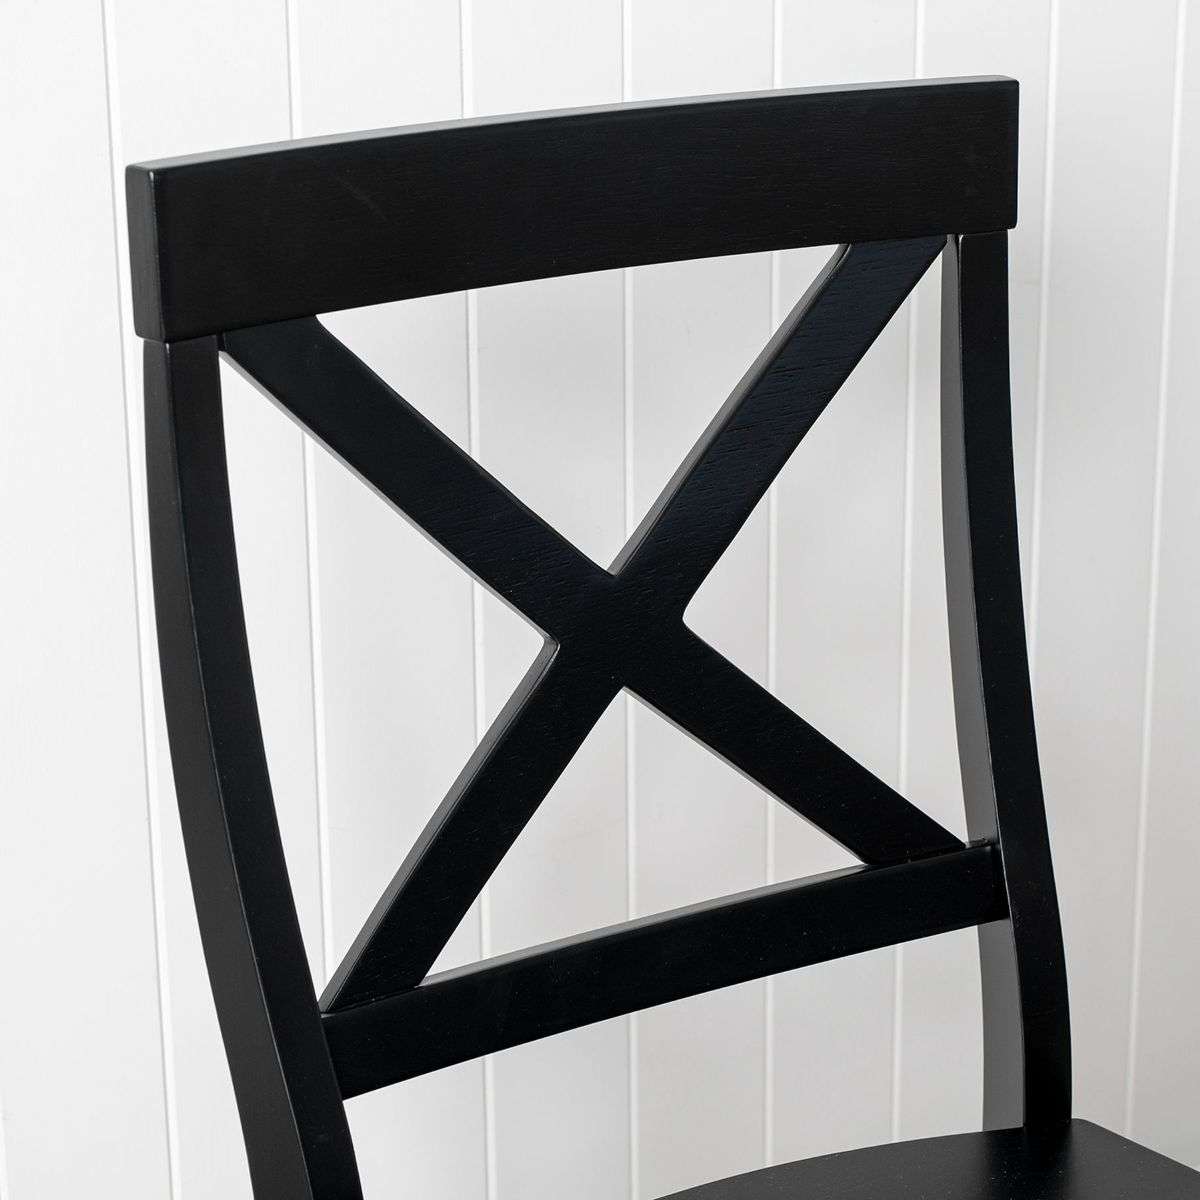 Hamptons Dining Chair - Black